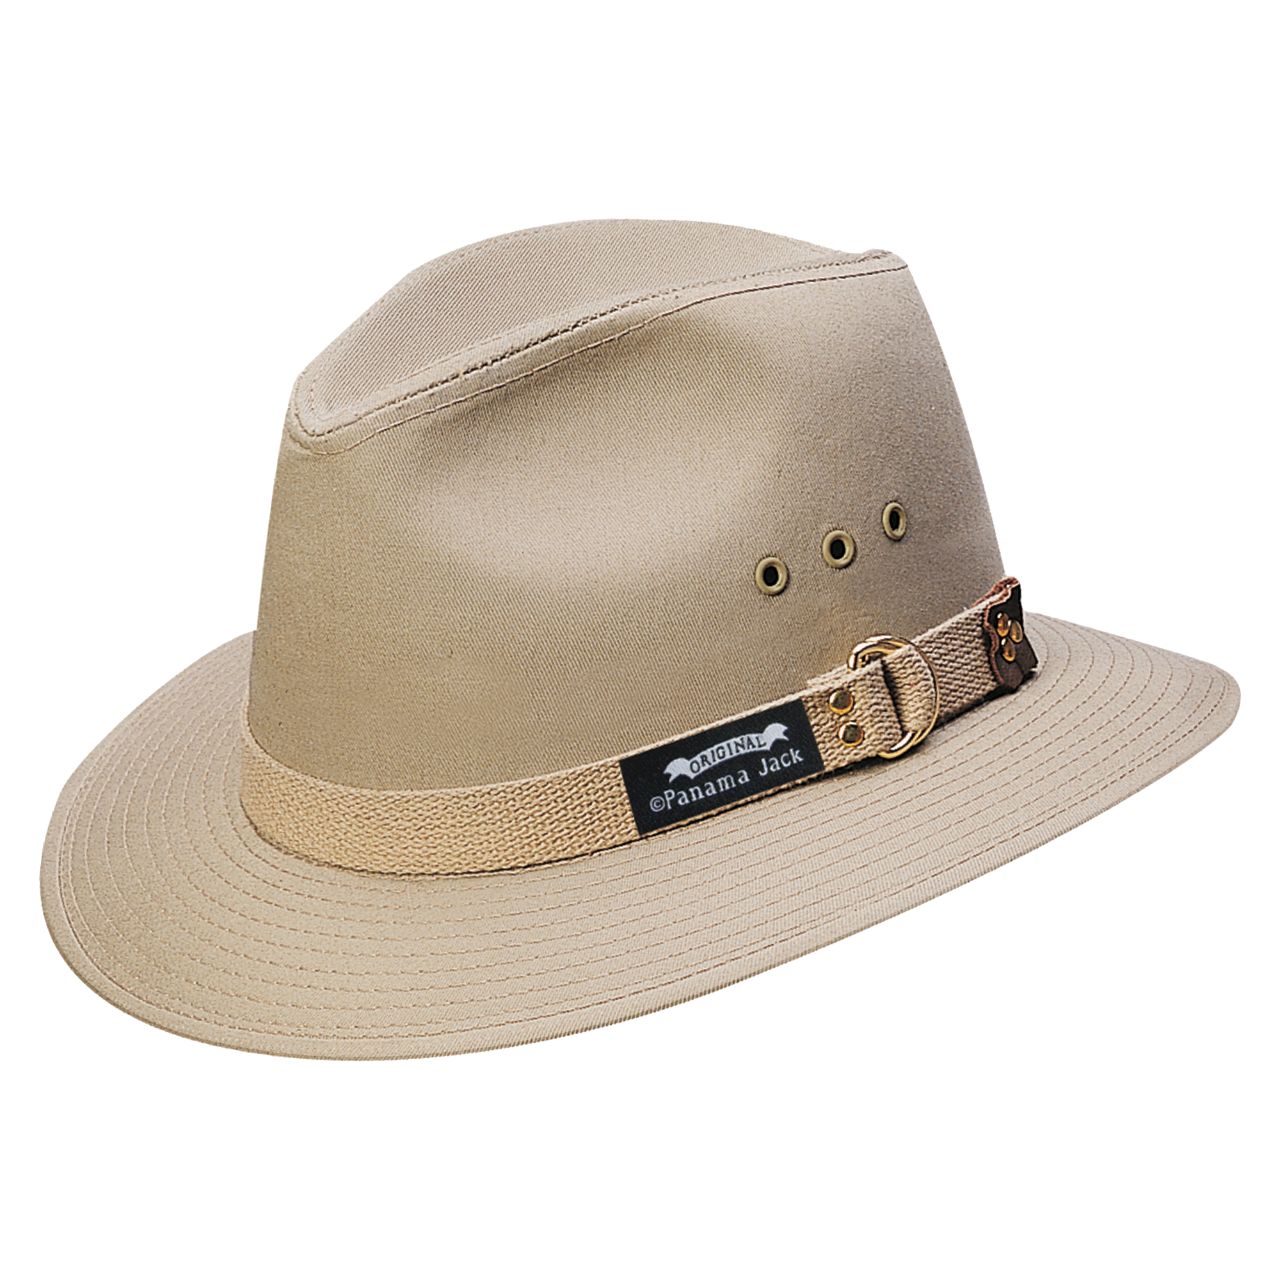 The Original Panama Jack Hat